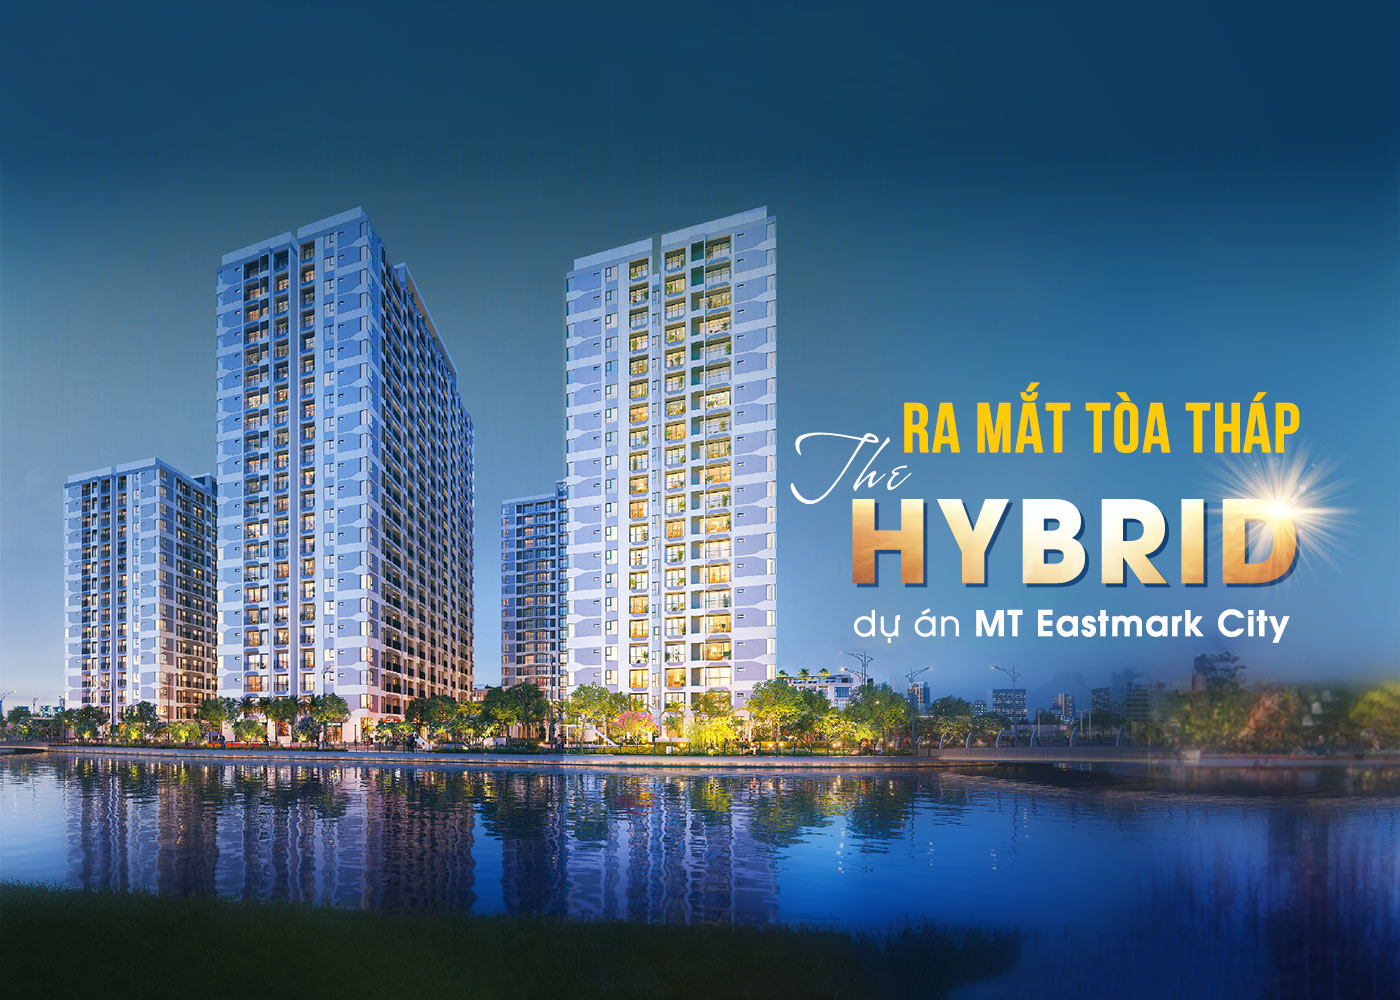 Ra mắt tòa tháp The Hybrid dự án MT Eastmark City - Ảnh 1